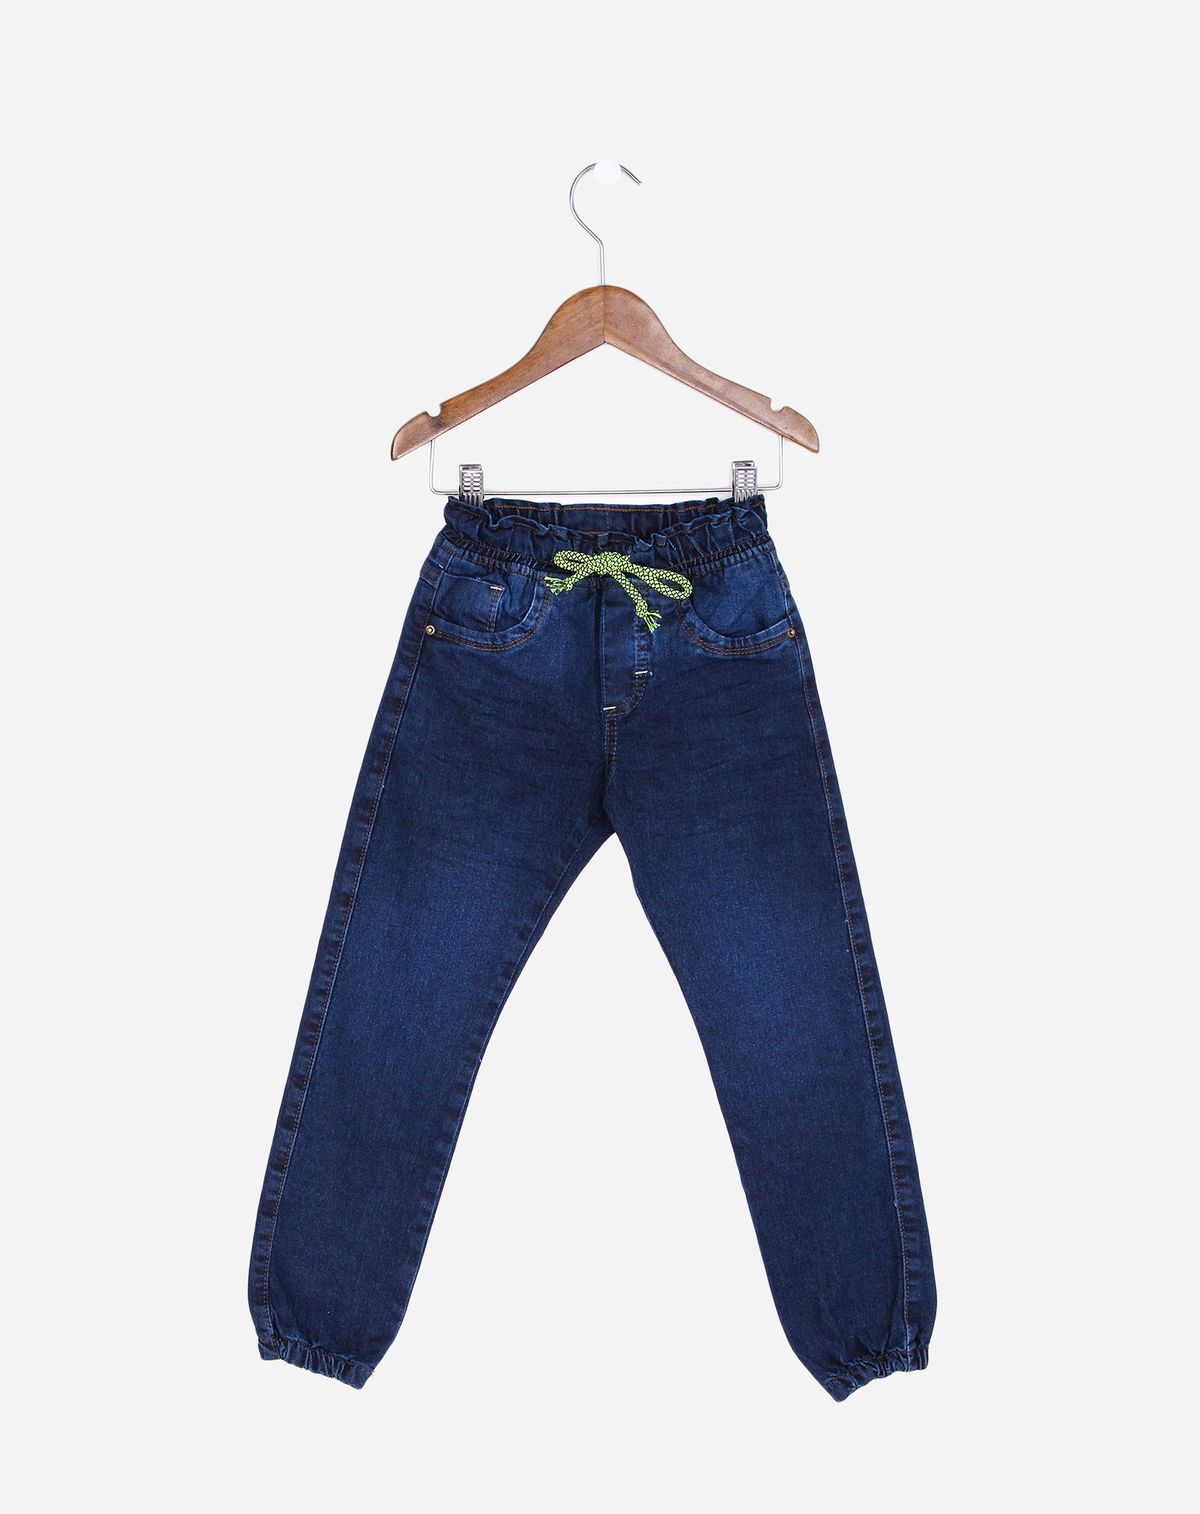 699818001-calca-jeans-infantil-menino-jogger---tam.-4-a-8-anos-jeans-4-0f3